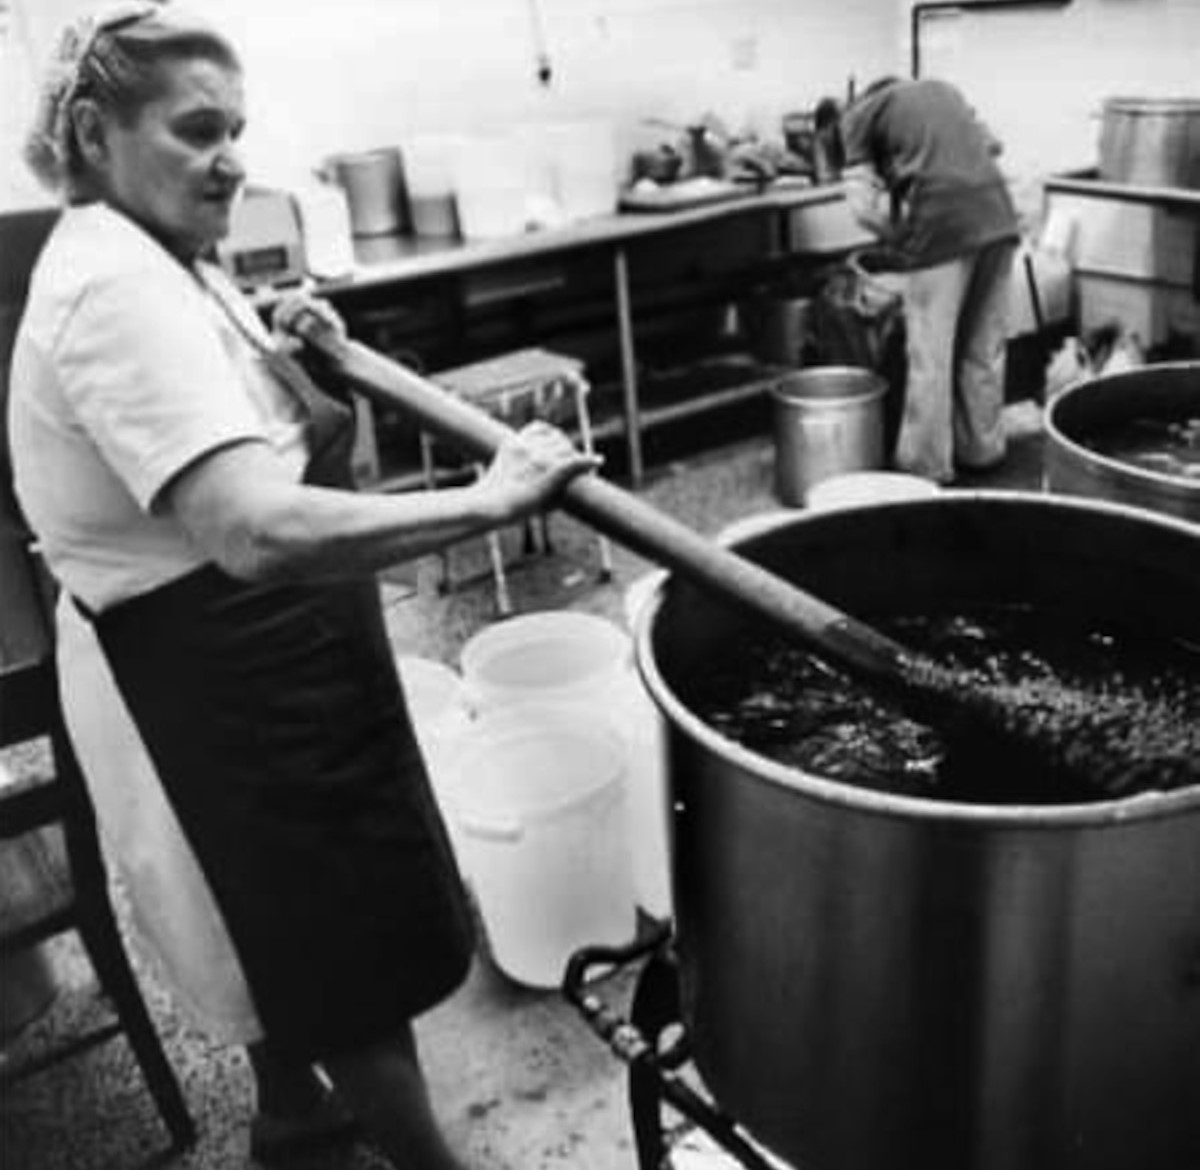 Staff member stirring big pot, black and white photo